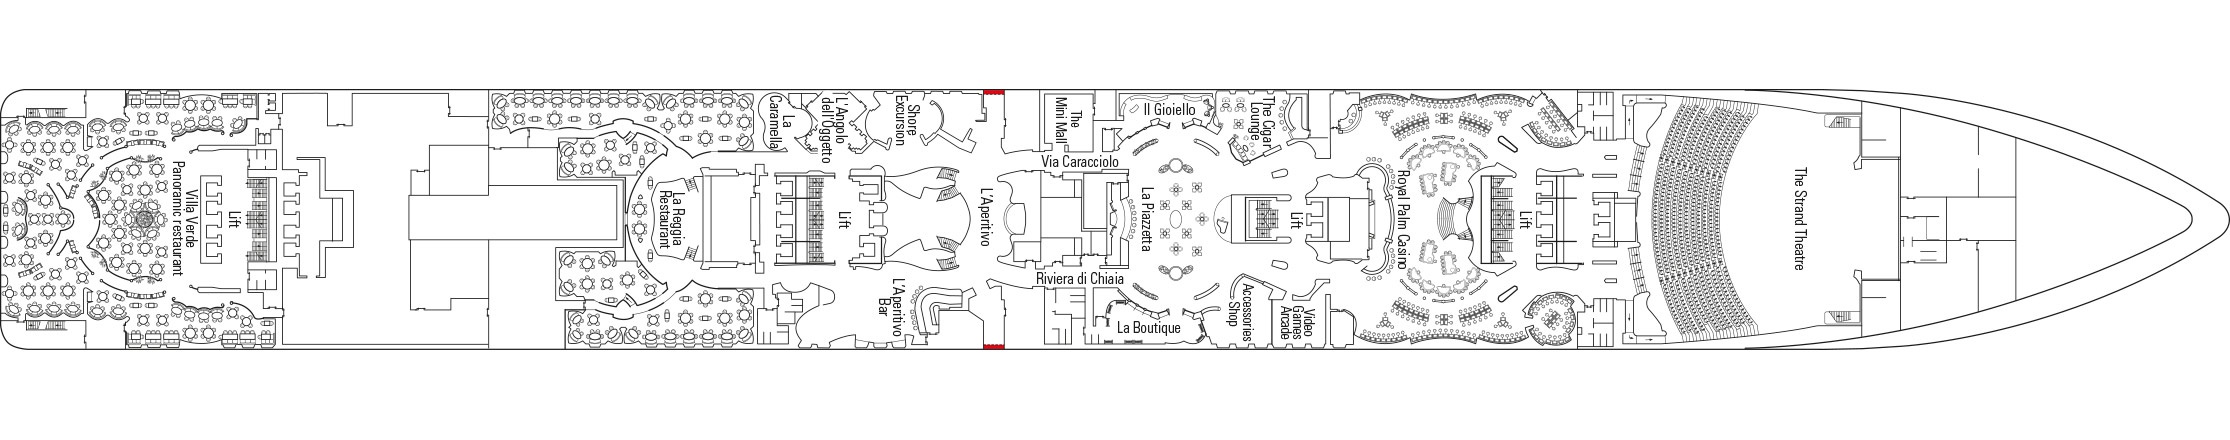 Планы палуб MSC Splendida: Палуба 6 - Modigliani